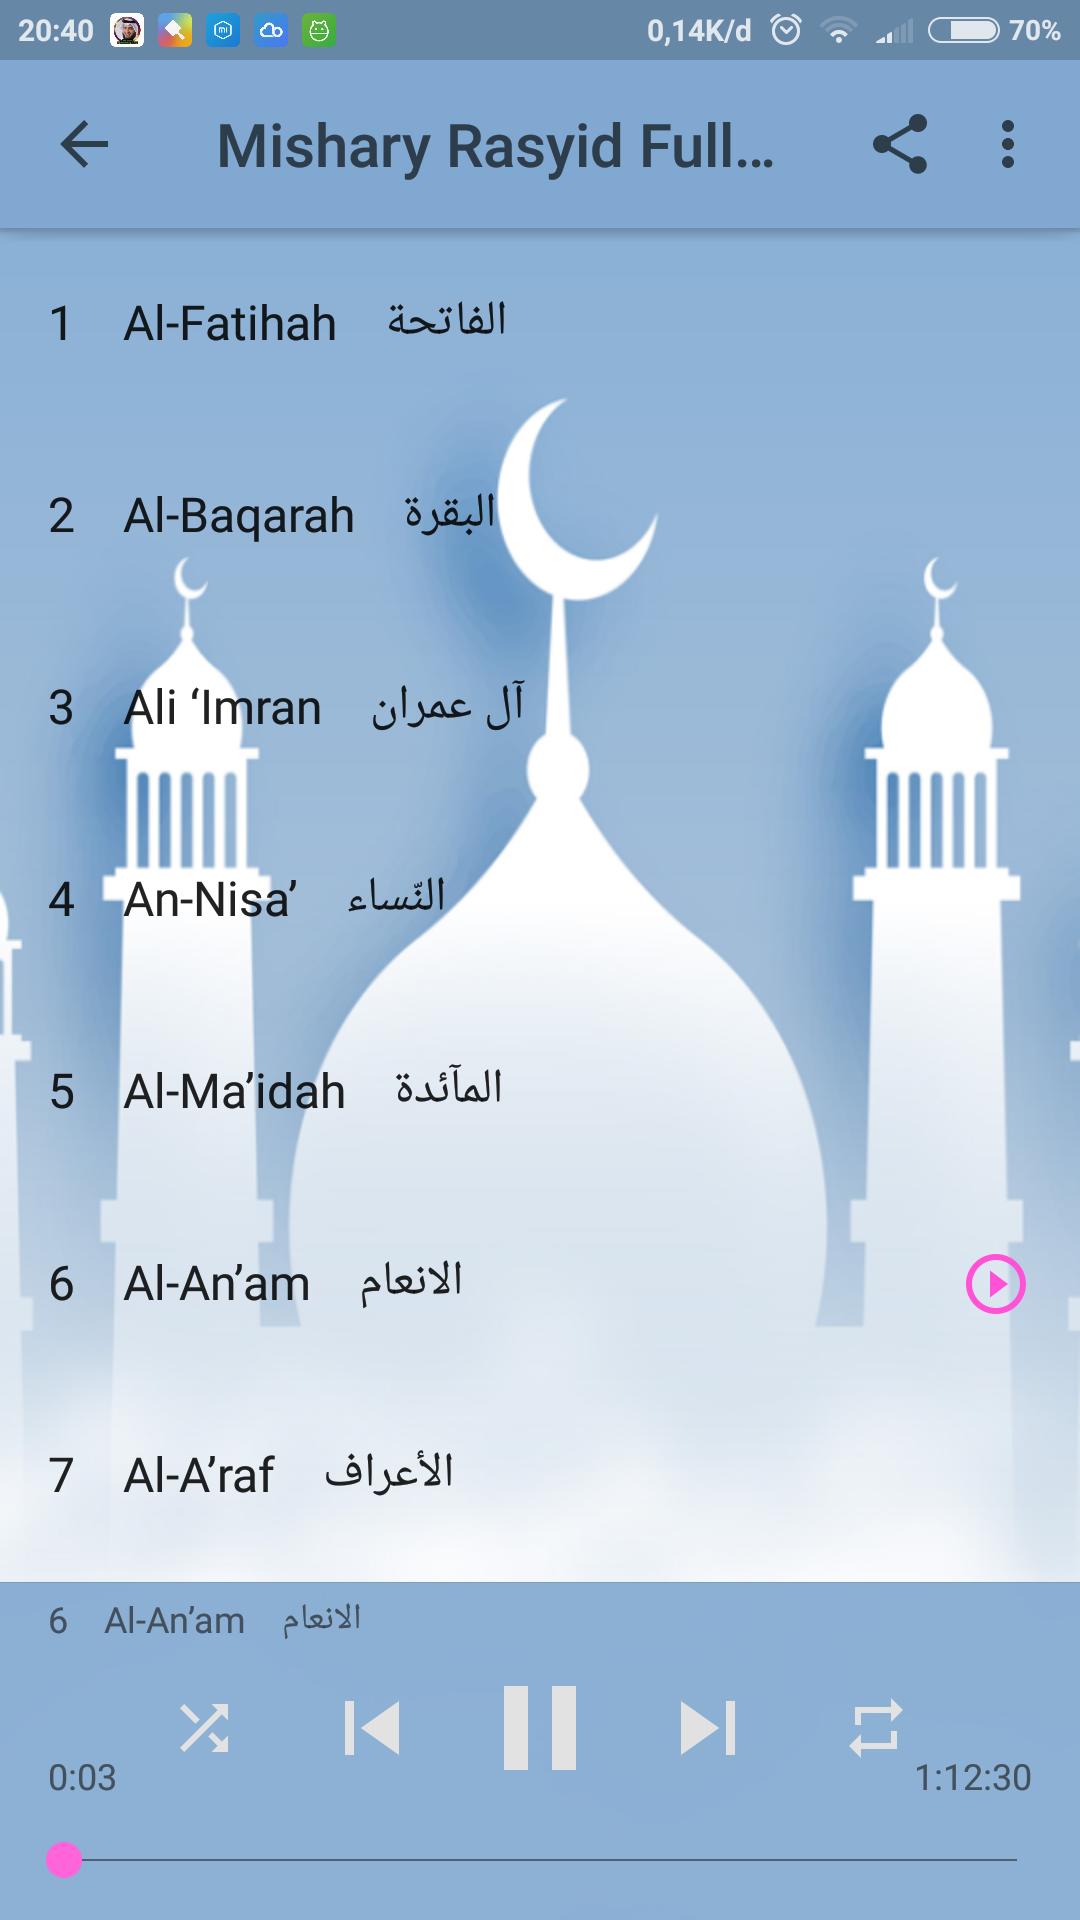 Full Quran Mp3 - Mishary Rashid Alafasy for Android - APK Download